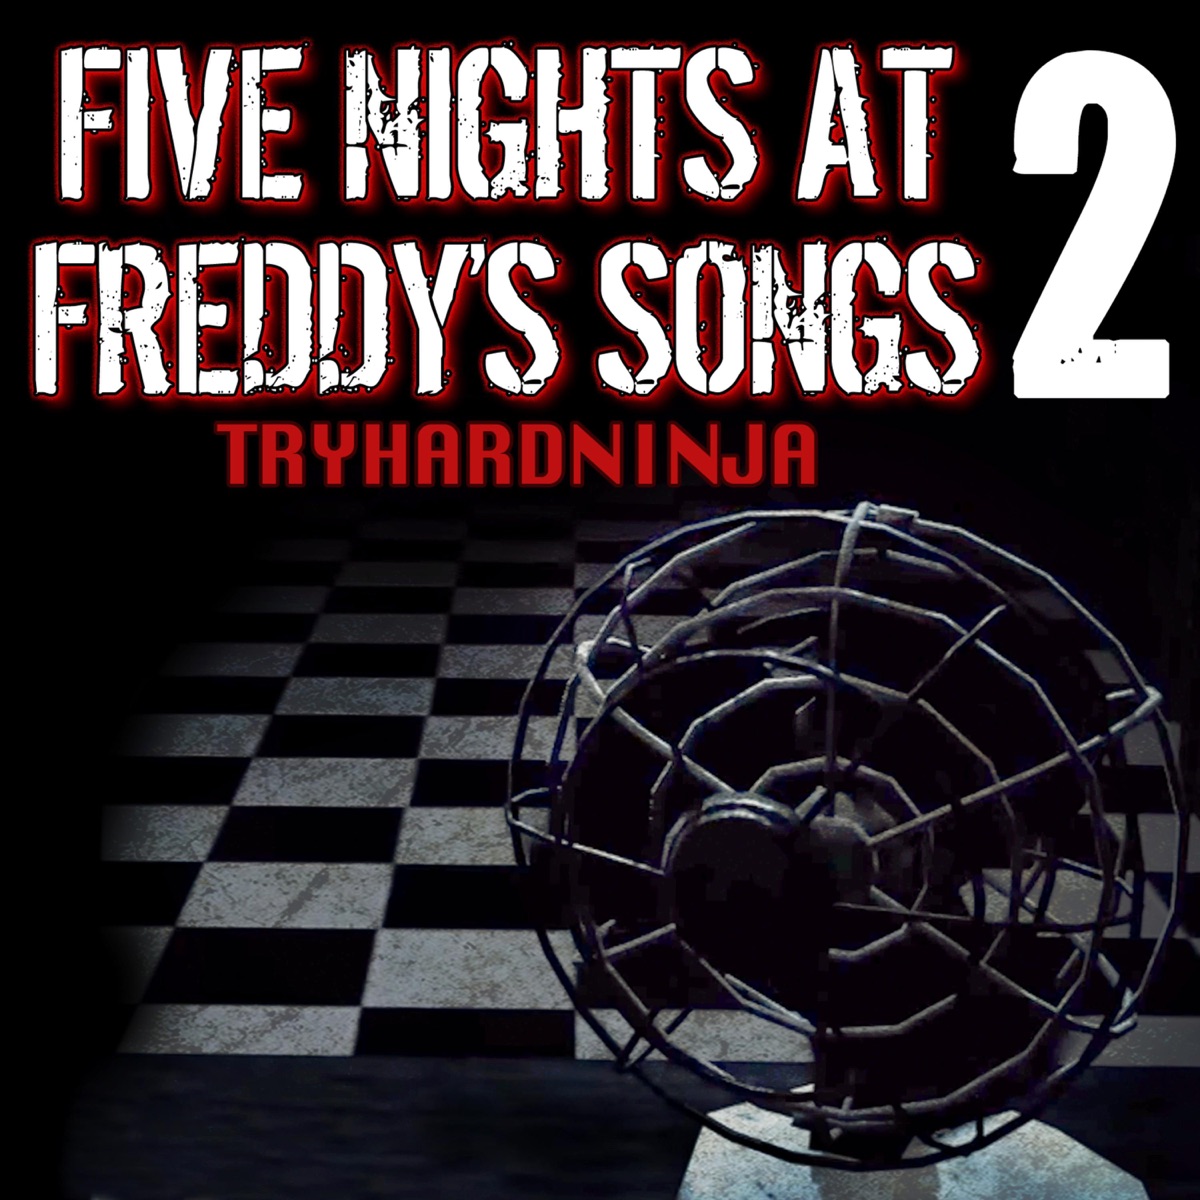 ‎Five Nights at Freddy's Songs by TryHardNinja on Apple Music